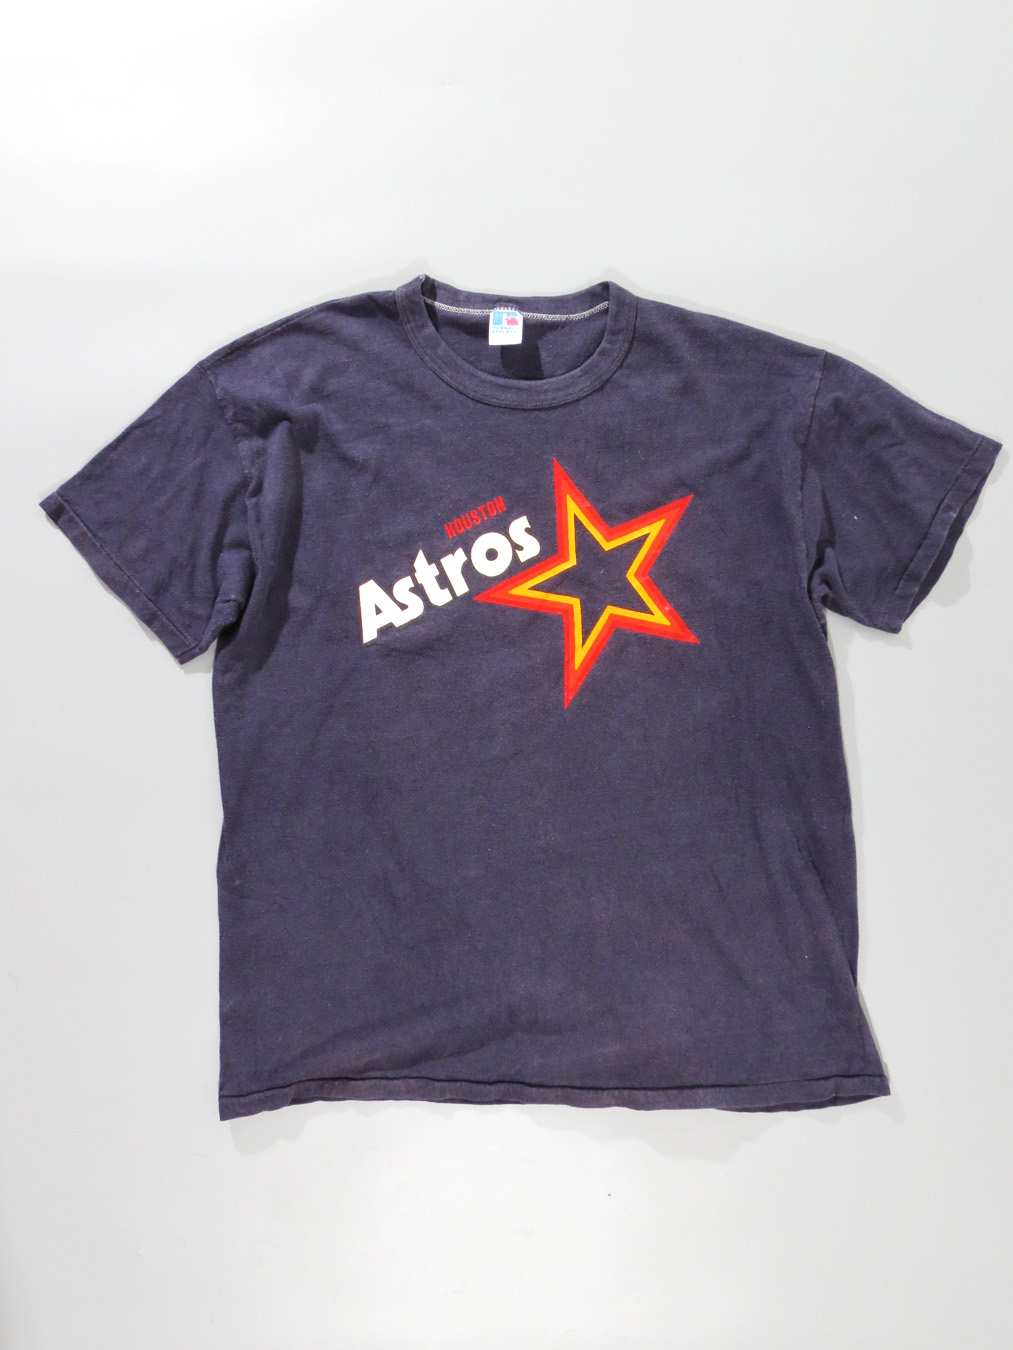 astros throwback shirt